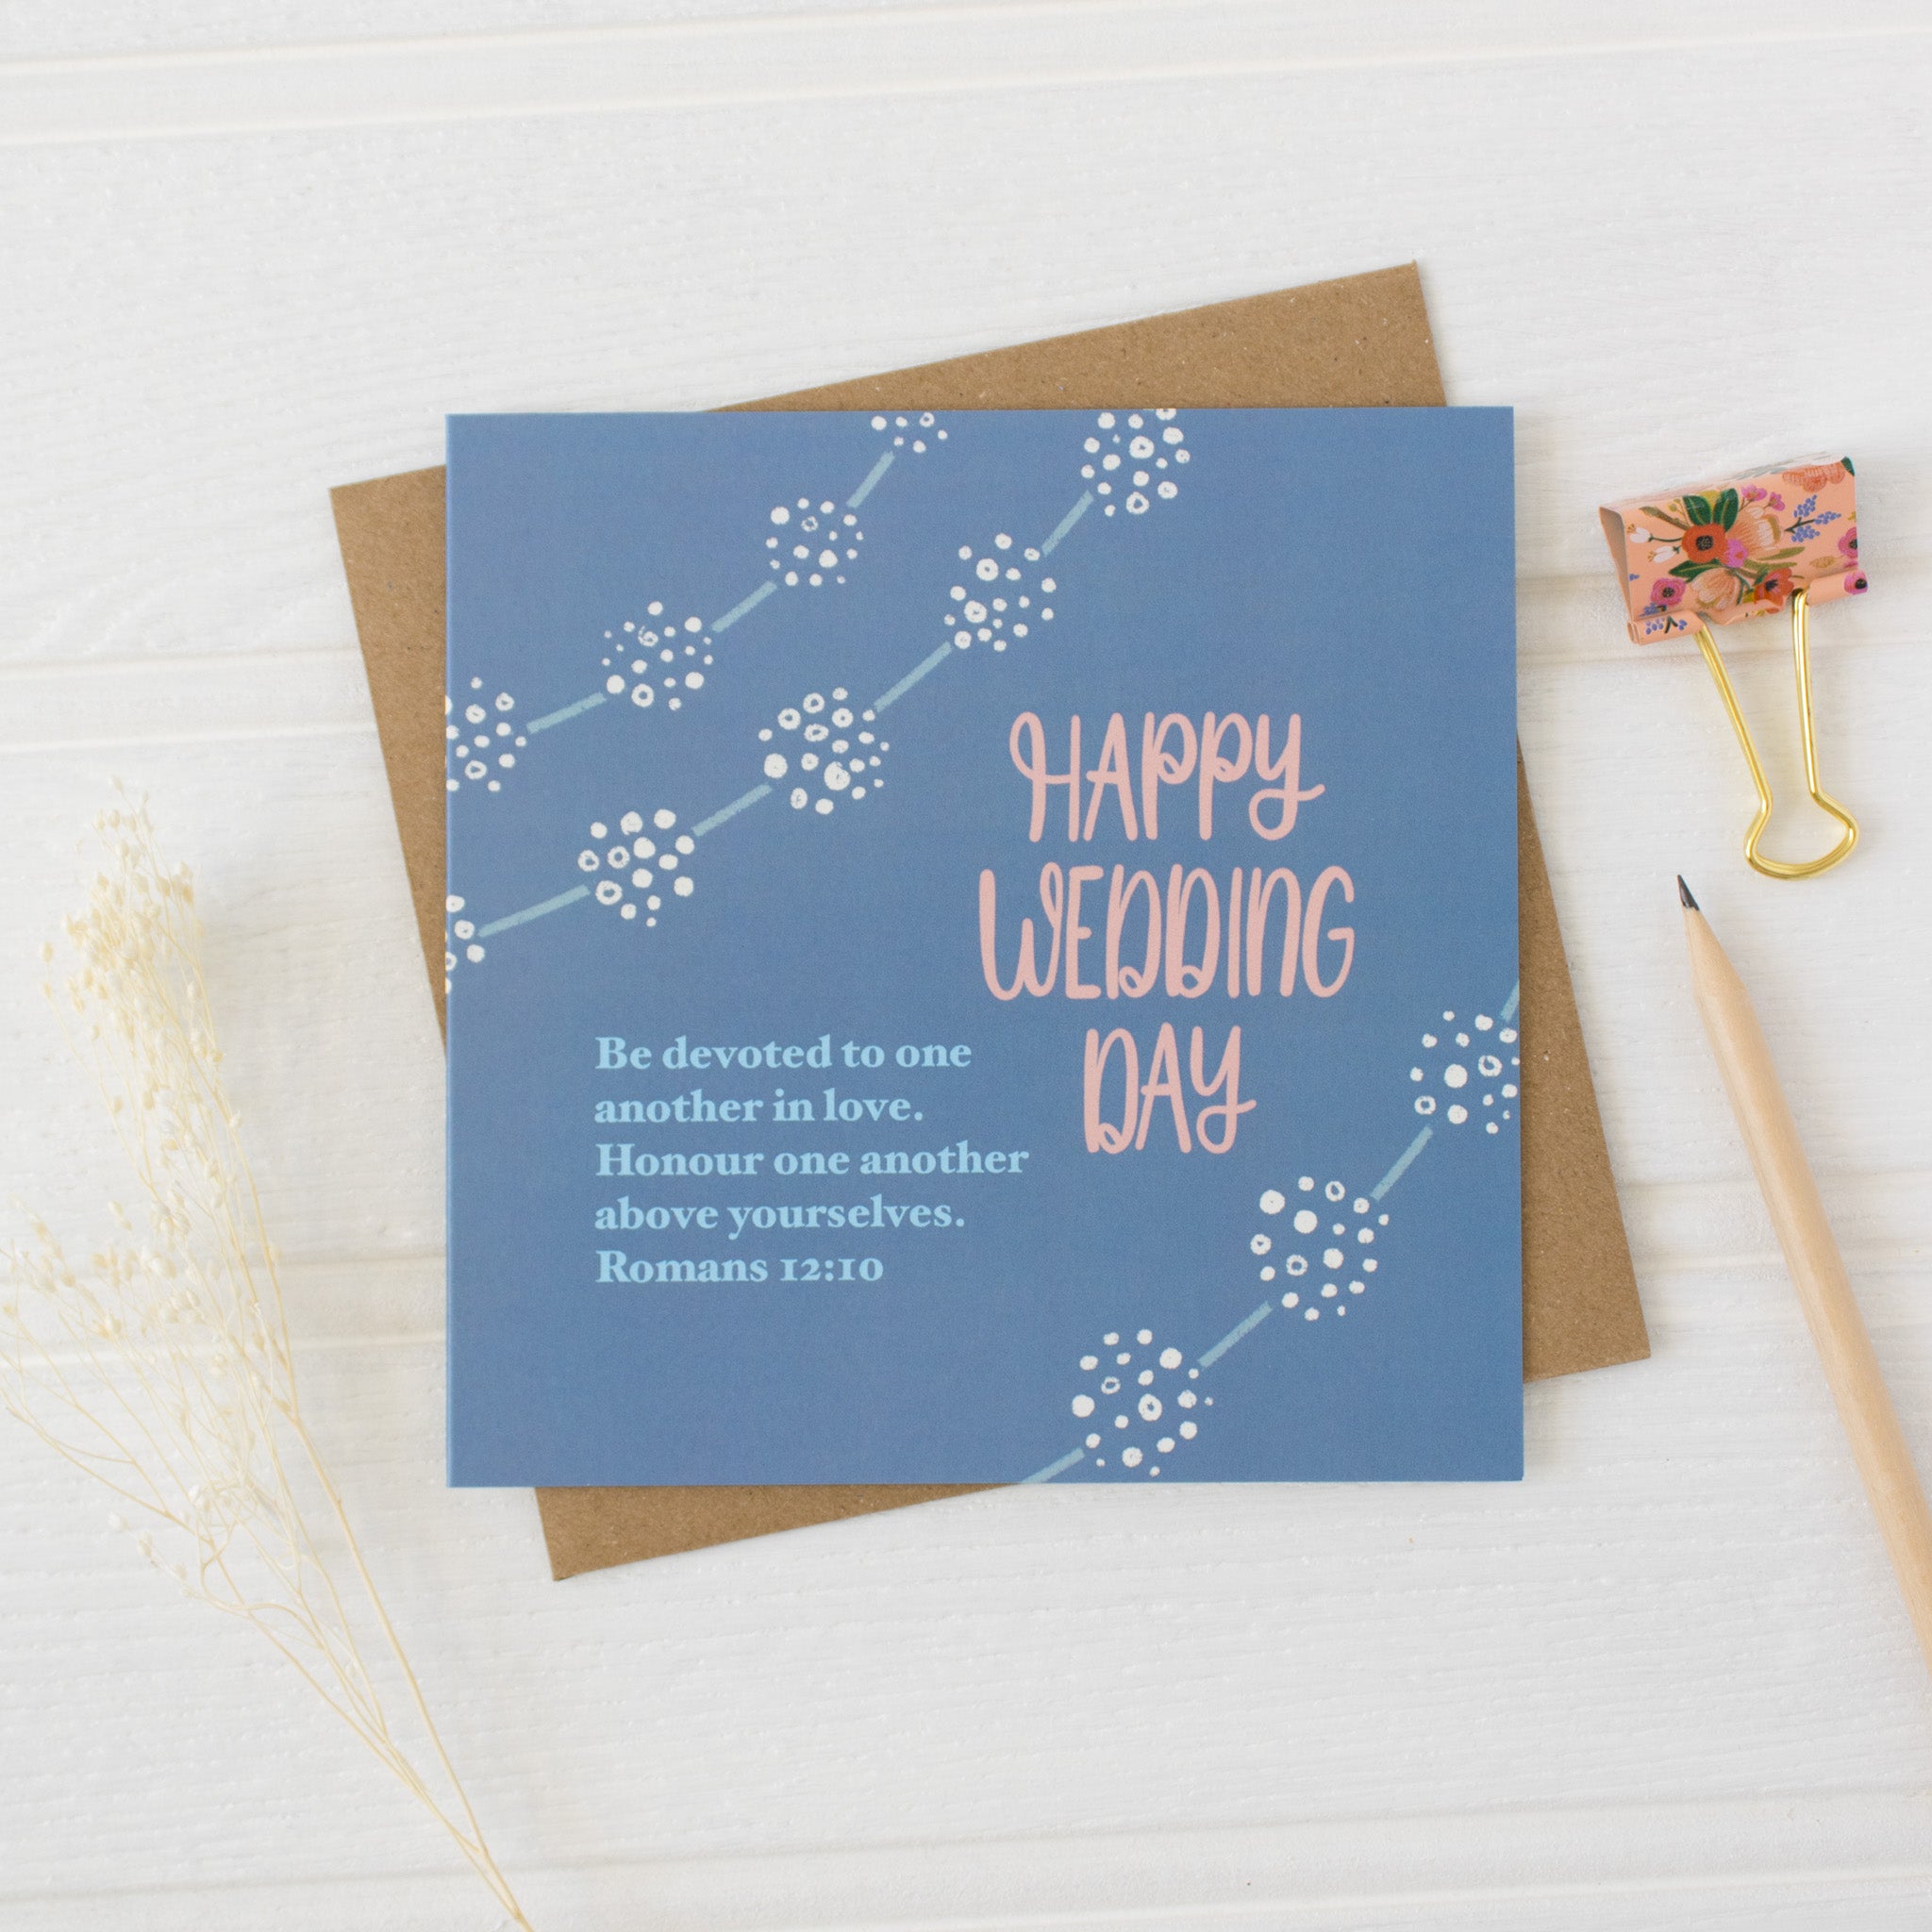 Happy Wedding Day Bible Verse Wedding Card with envelope